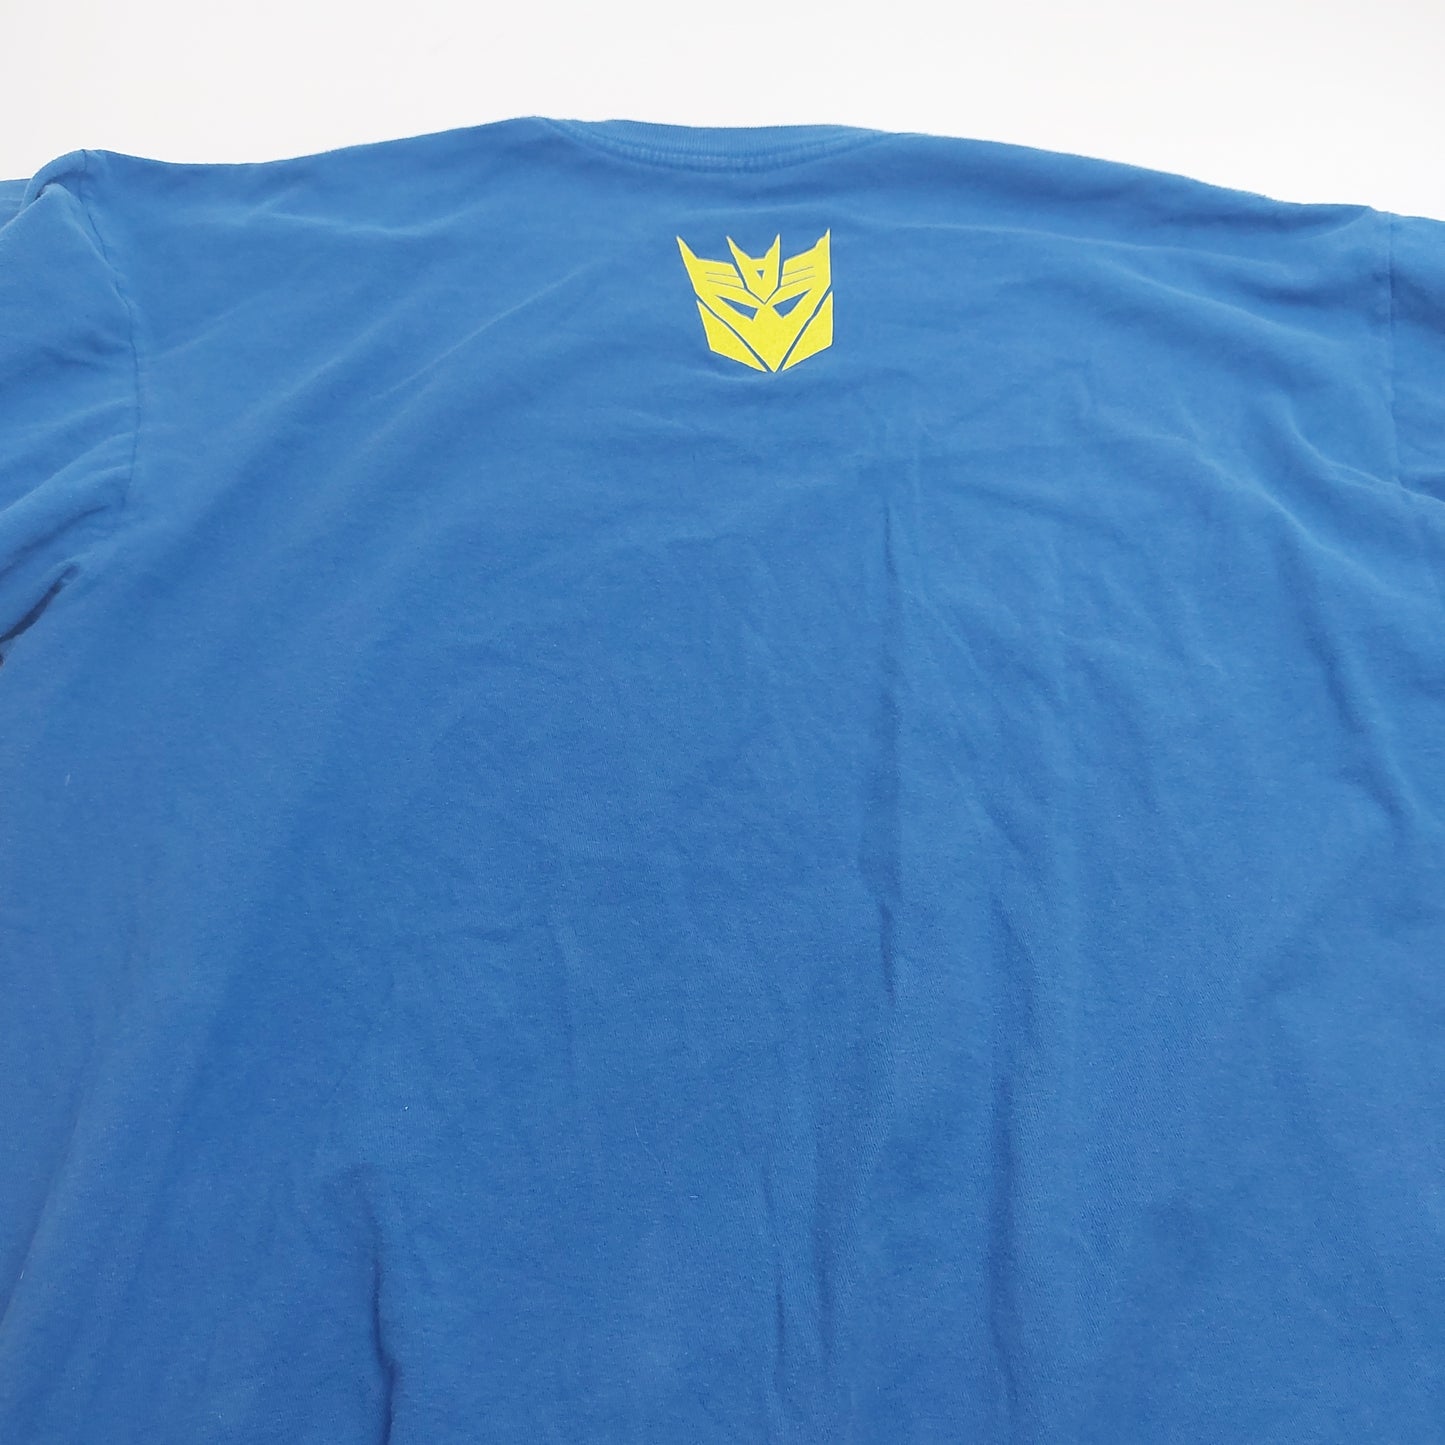 Transformer T-shirt Sound Wave Blue shirt Size XL TF Con